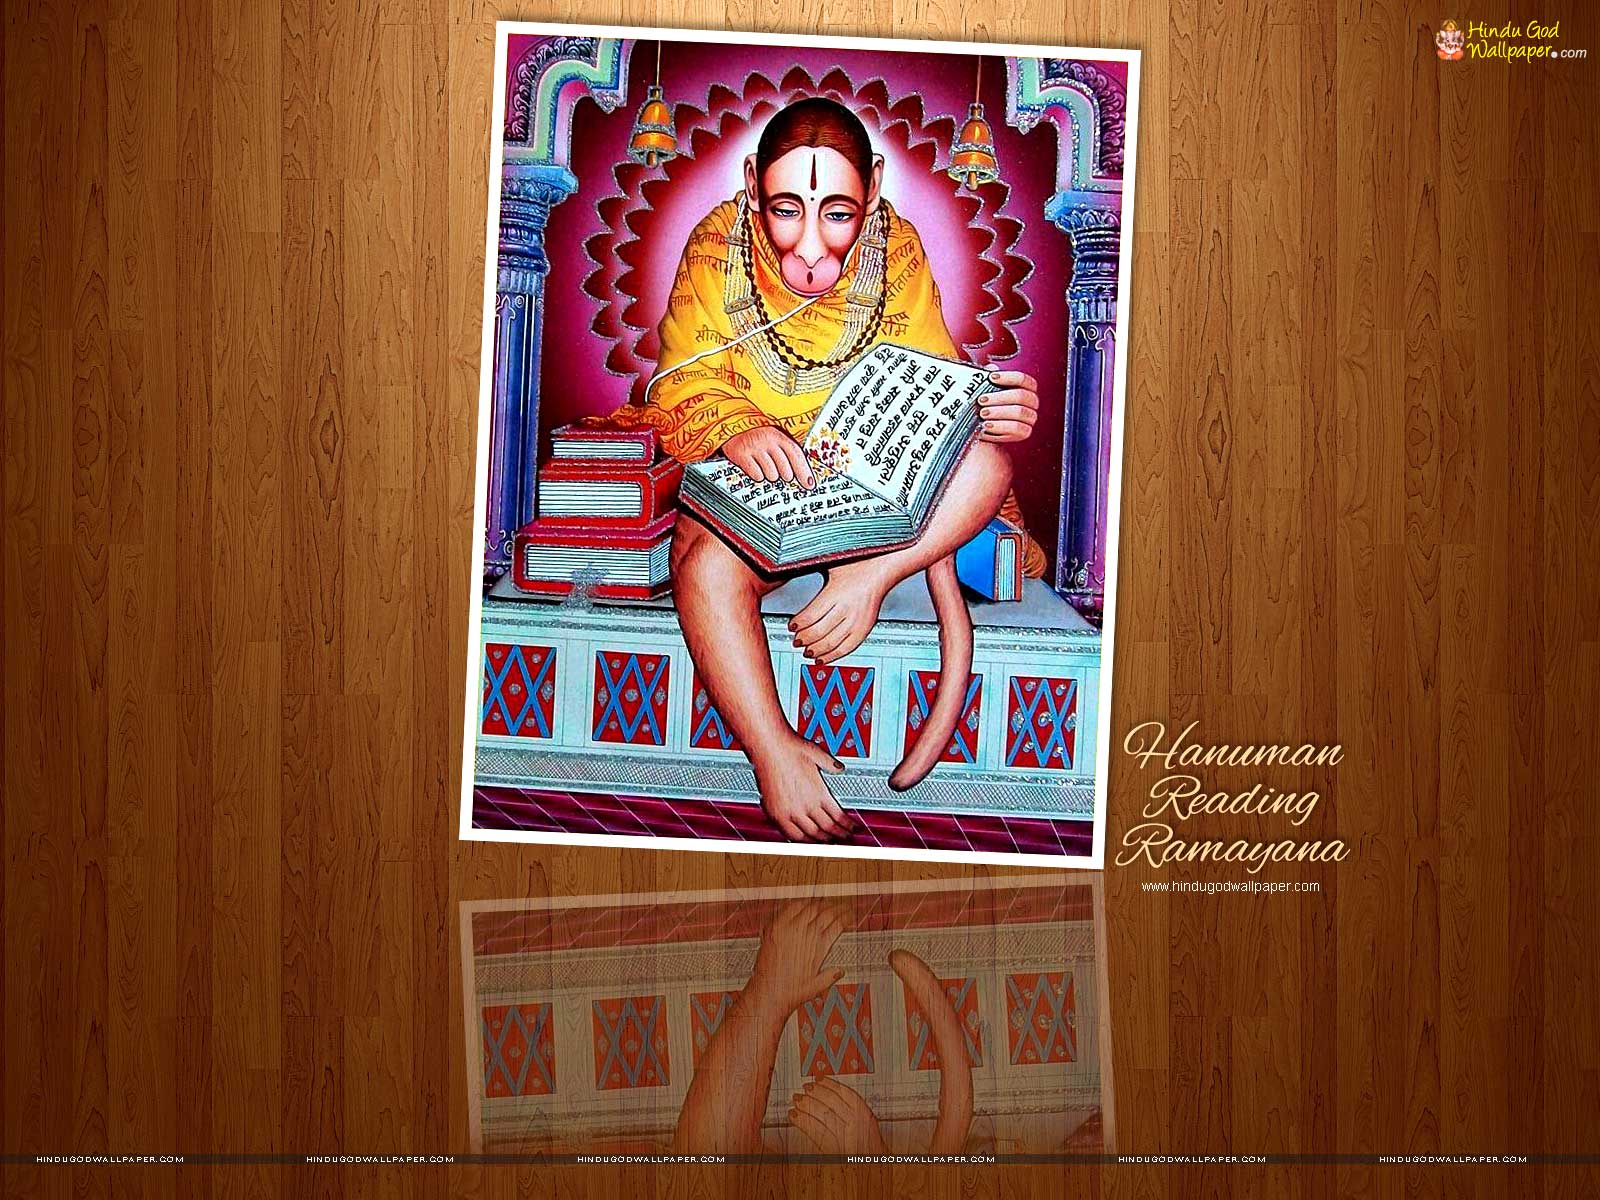 Hanuman Reading Ramayana Wallpaper